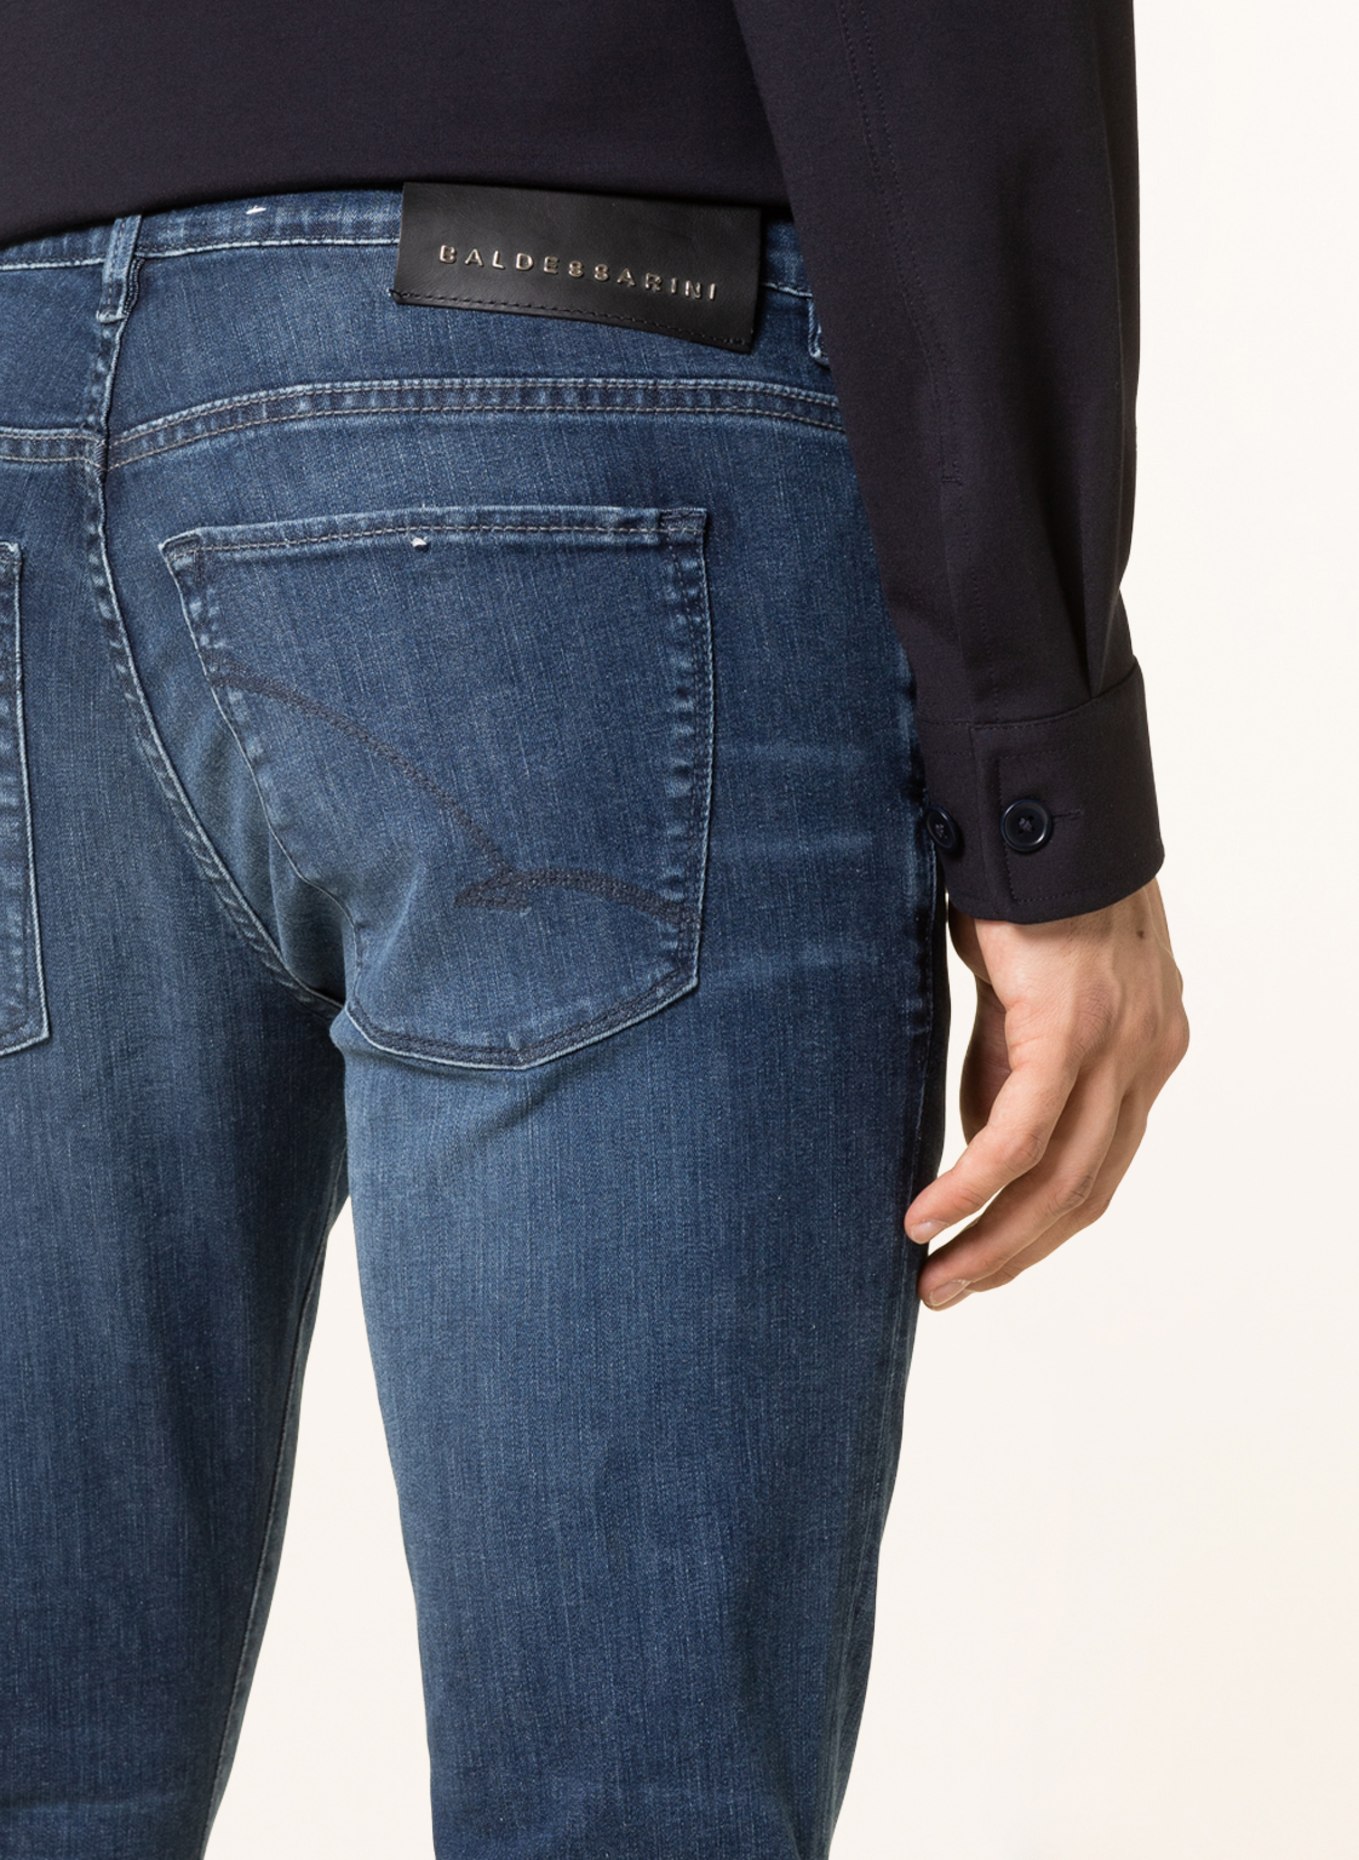 BALDESSARINI Jeans Slim Fit, Farbe: 6836 blue used buffies (Bild 5)